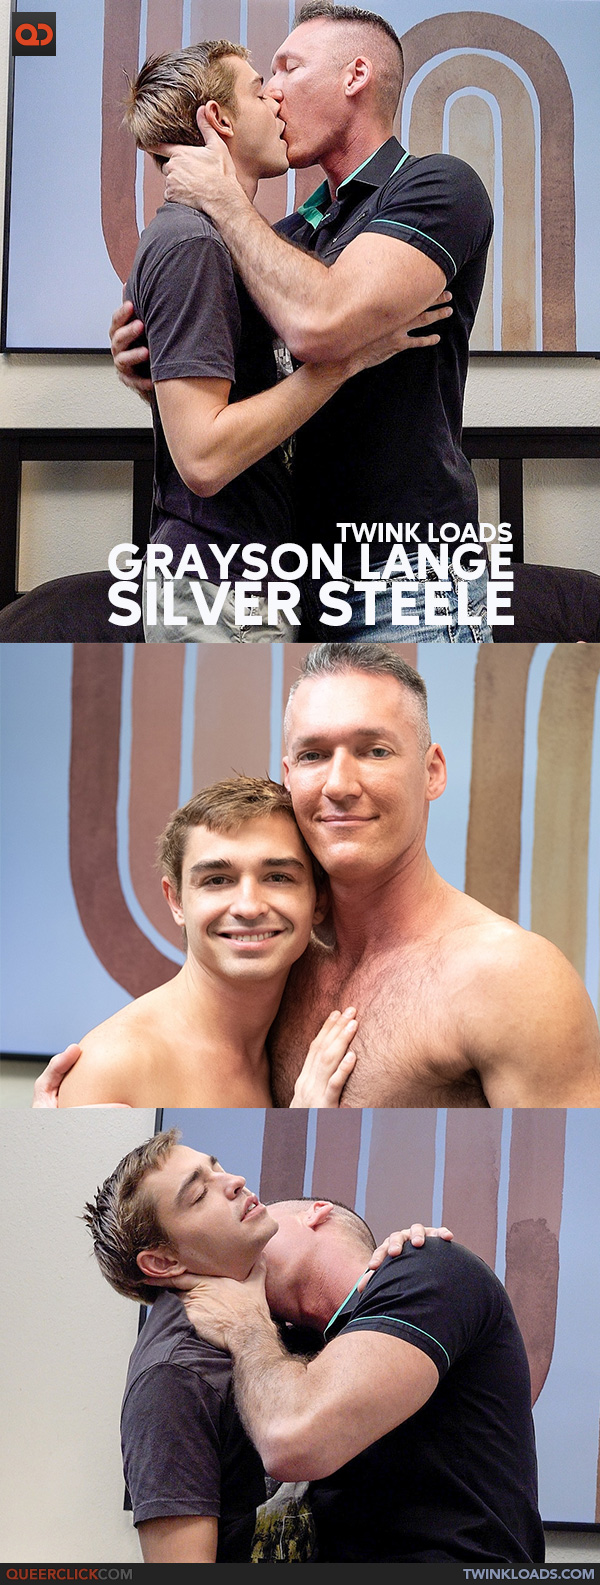 Carnal+ | Twink Loads: Grayson Lange and Silver Steele